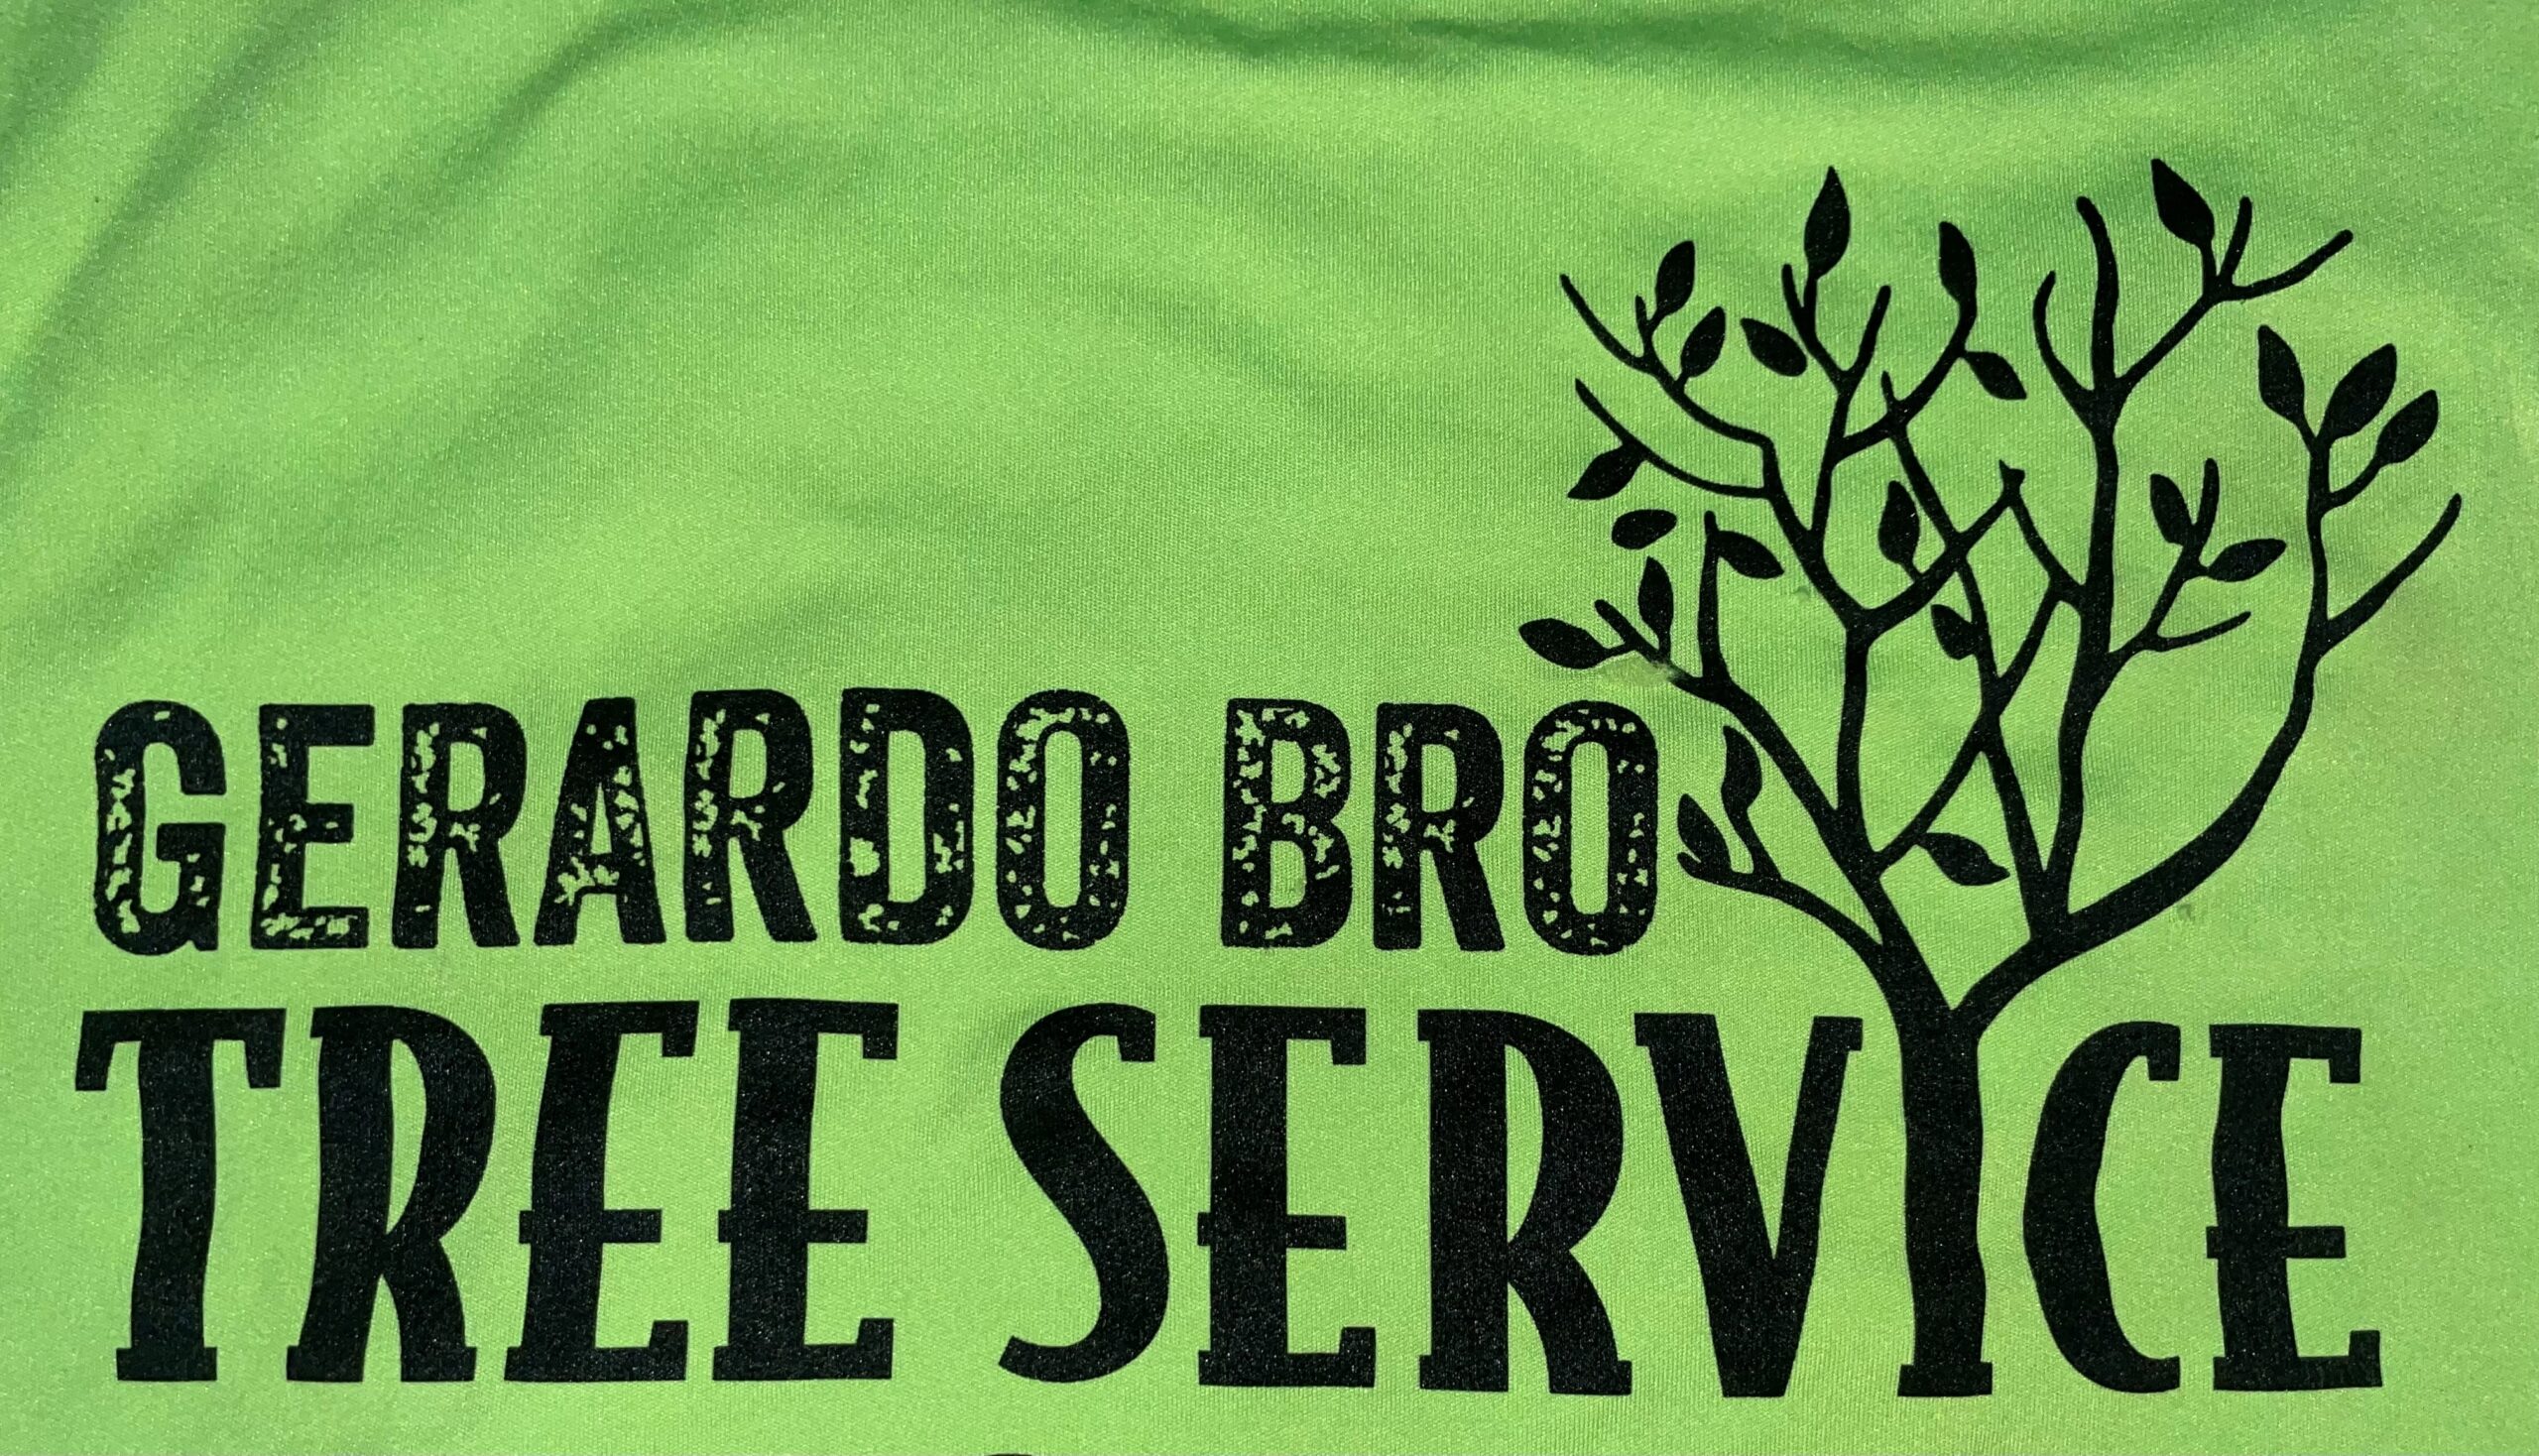 Gerardo Bro Tree Service